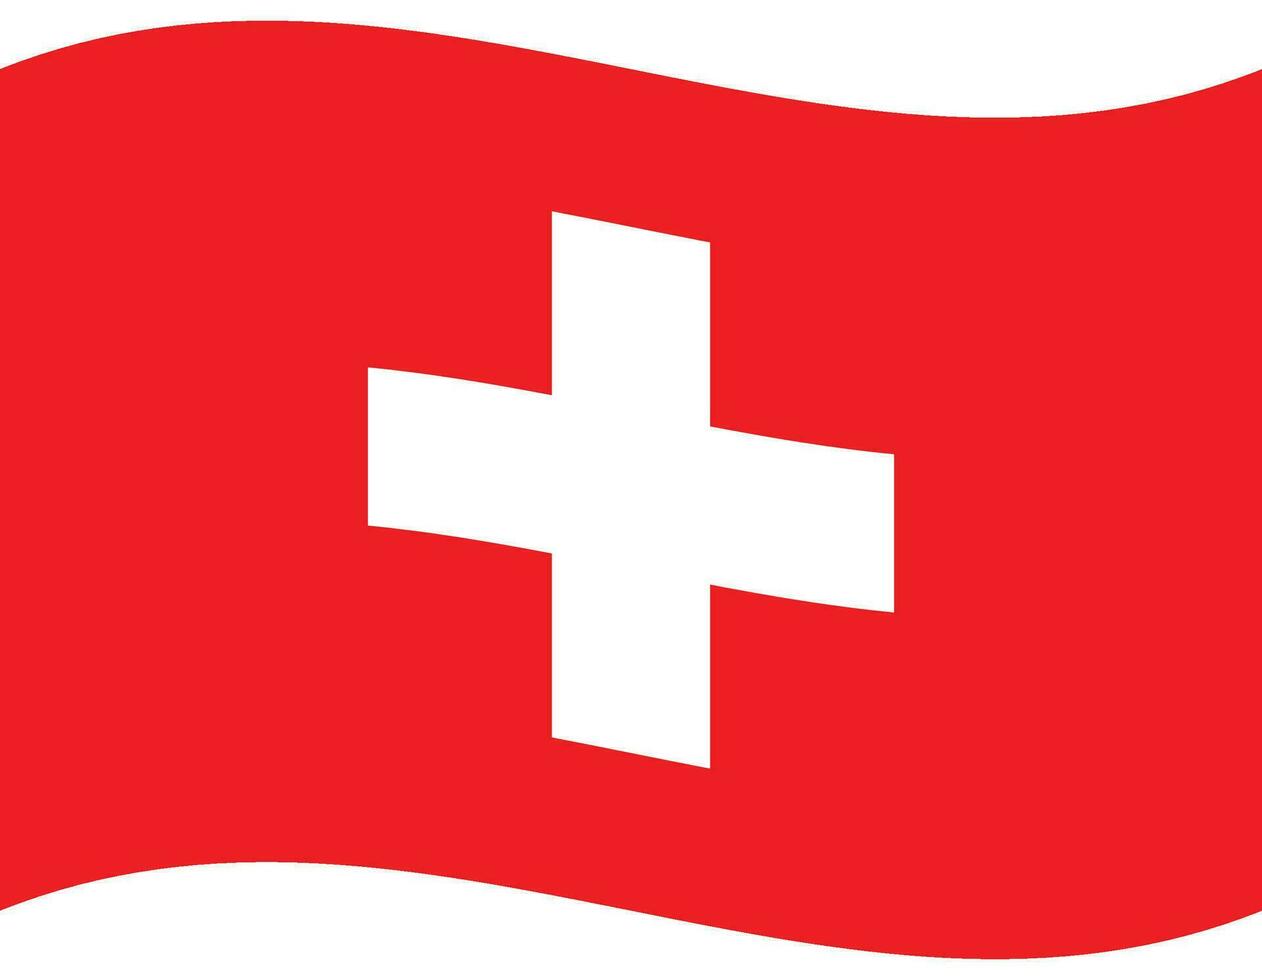 Svizzera bandiera onda. svizzero bandiera. bandiera di Svizzera vettore